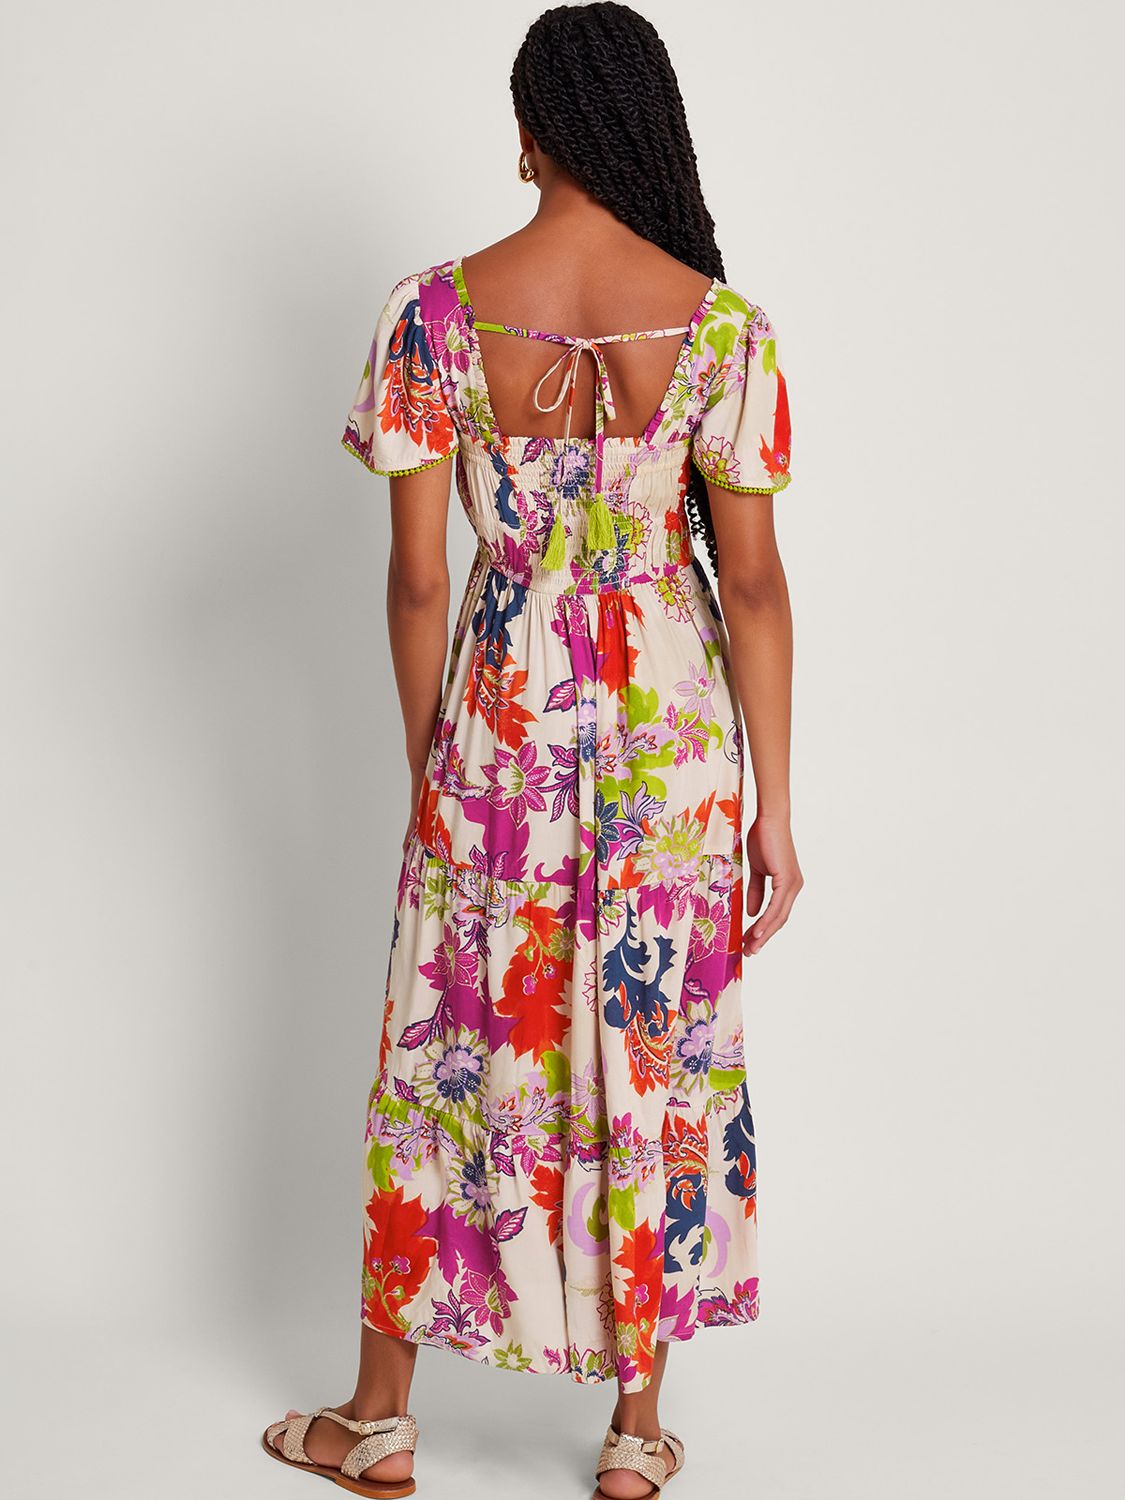 Monsoon Arissa Floral Print Square Neck Midi Dress, Ivory/Multi, S